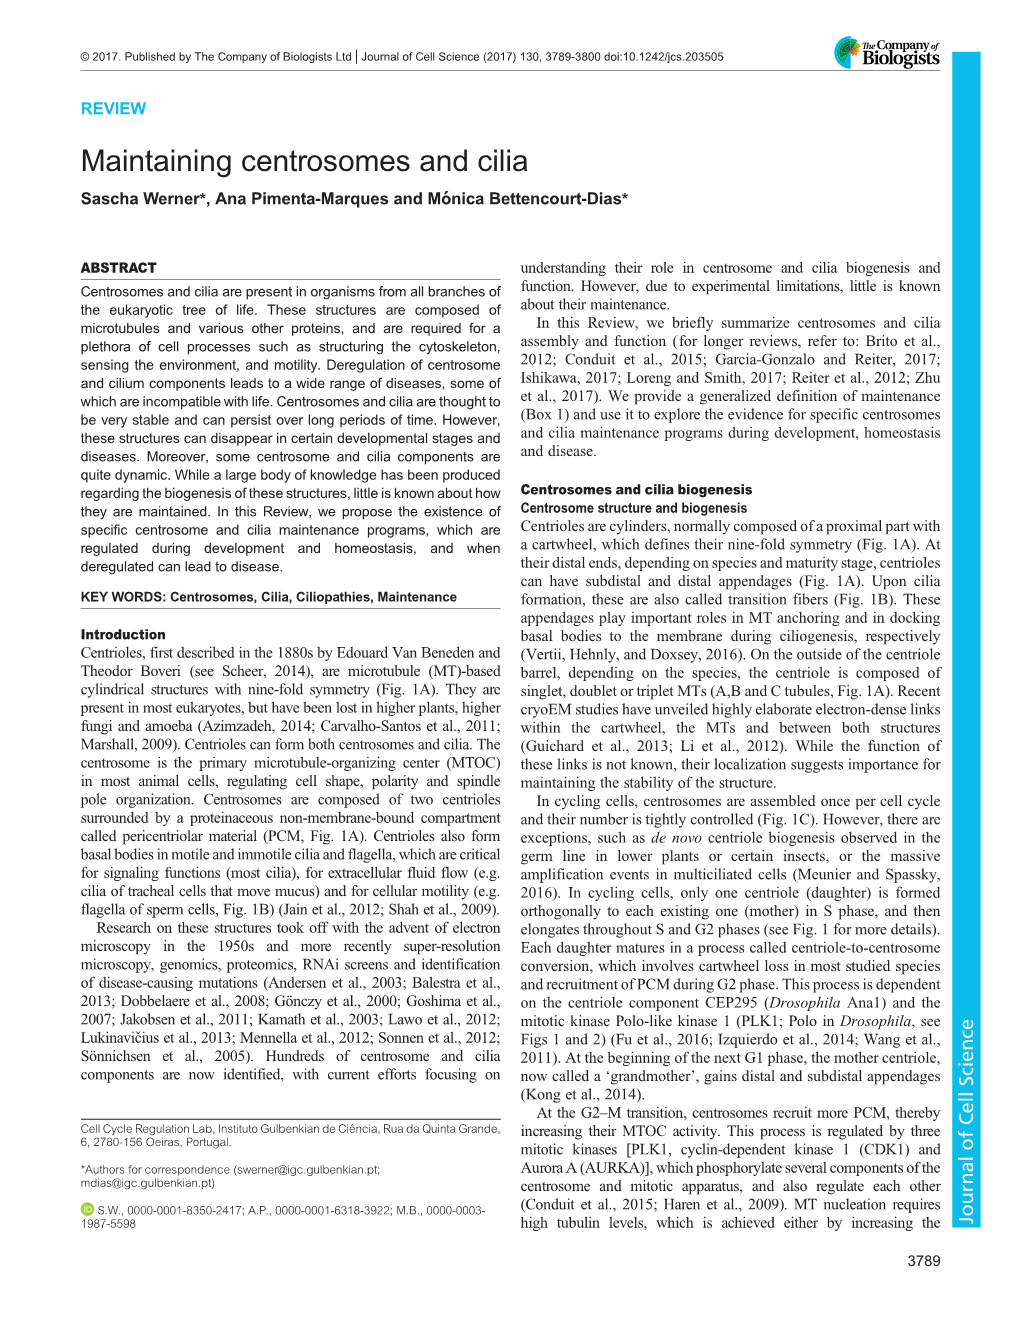 Maintaining Centrosomes and Cilia Sascha Werner*, Ana Pimenta-Marques and Mónica Bettencourt-Dias*